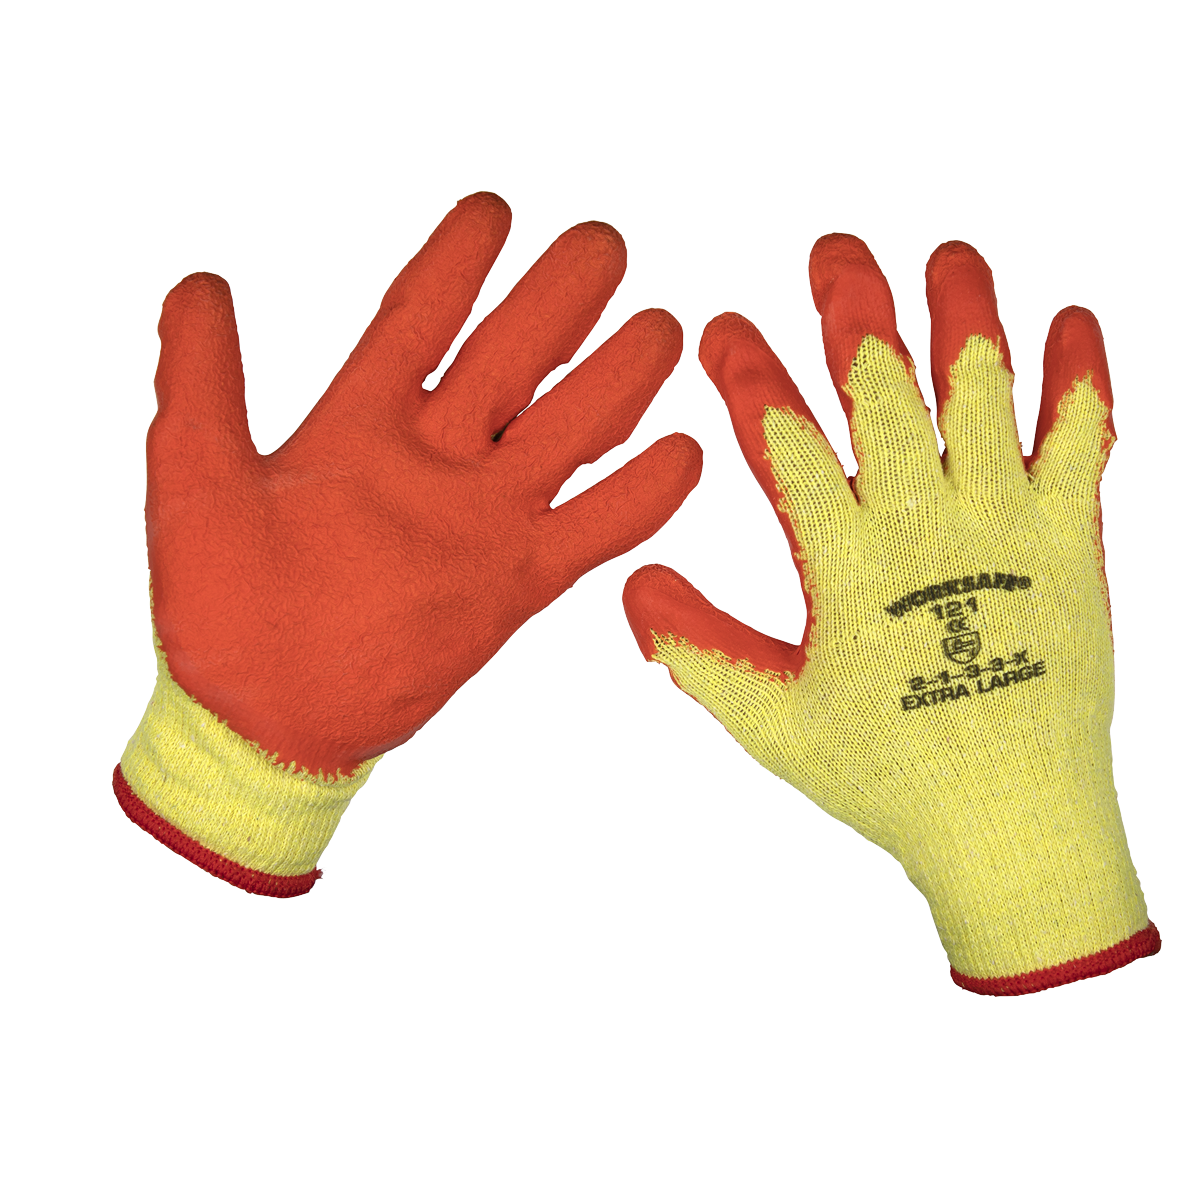 Super Grip Knitted Gloves Latex Palm (X-Large) - Pair - 9121XL - Farming Parts